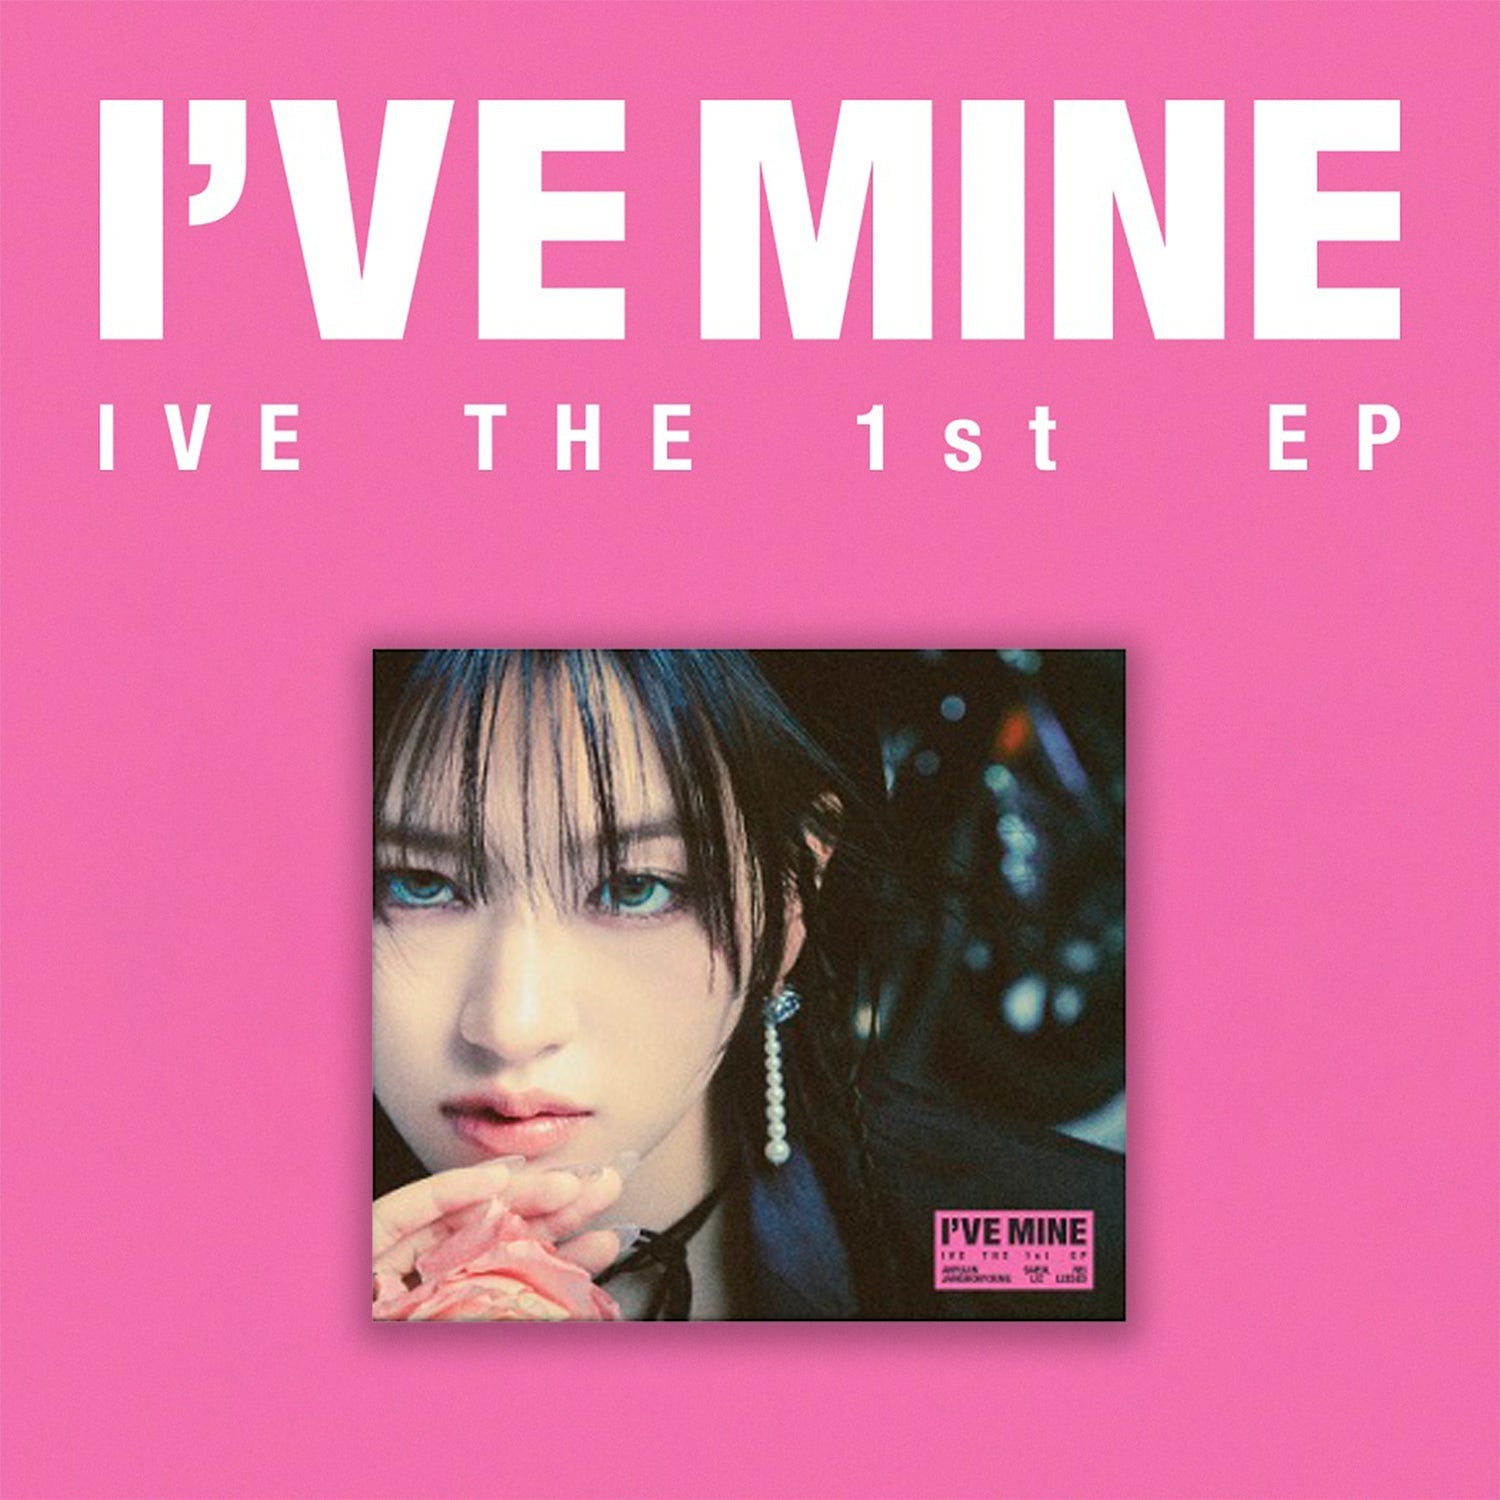 IVE 1ST EP ALBUM 'I'VE MINE' (DIGIPACK)